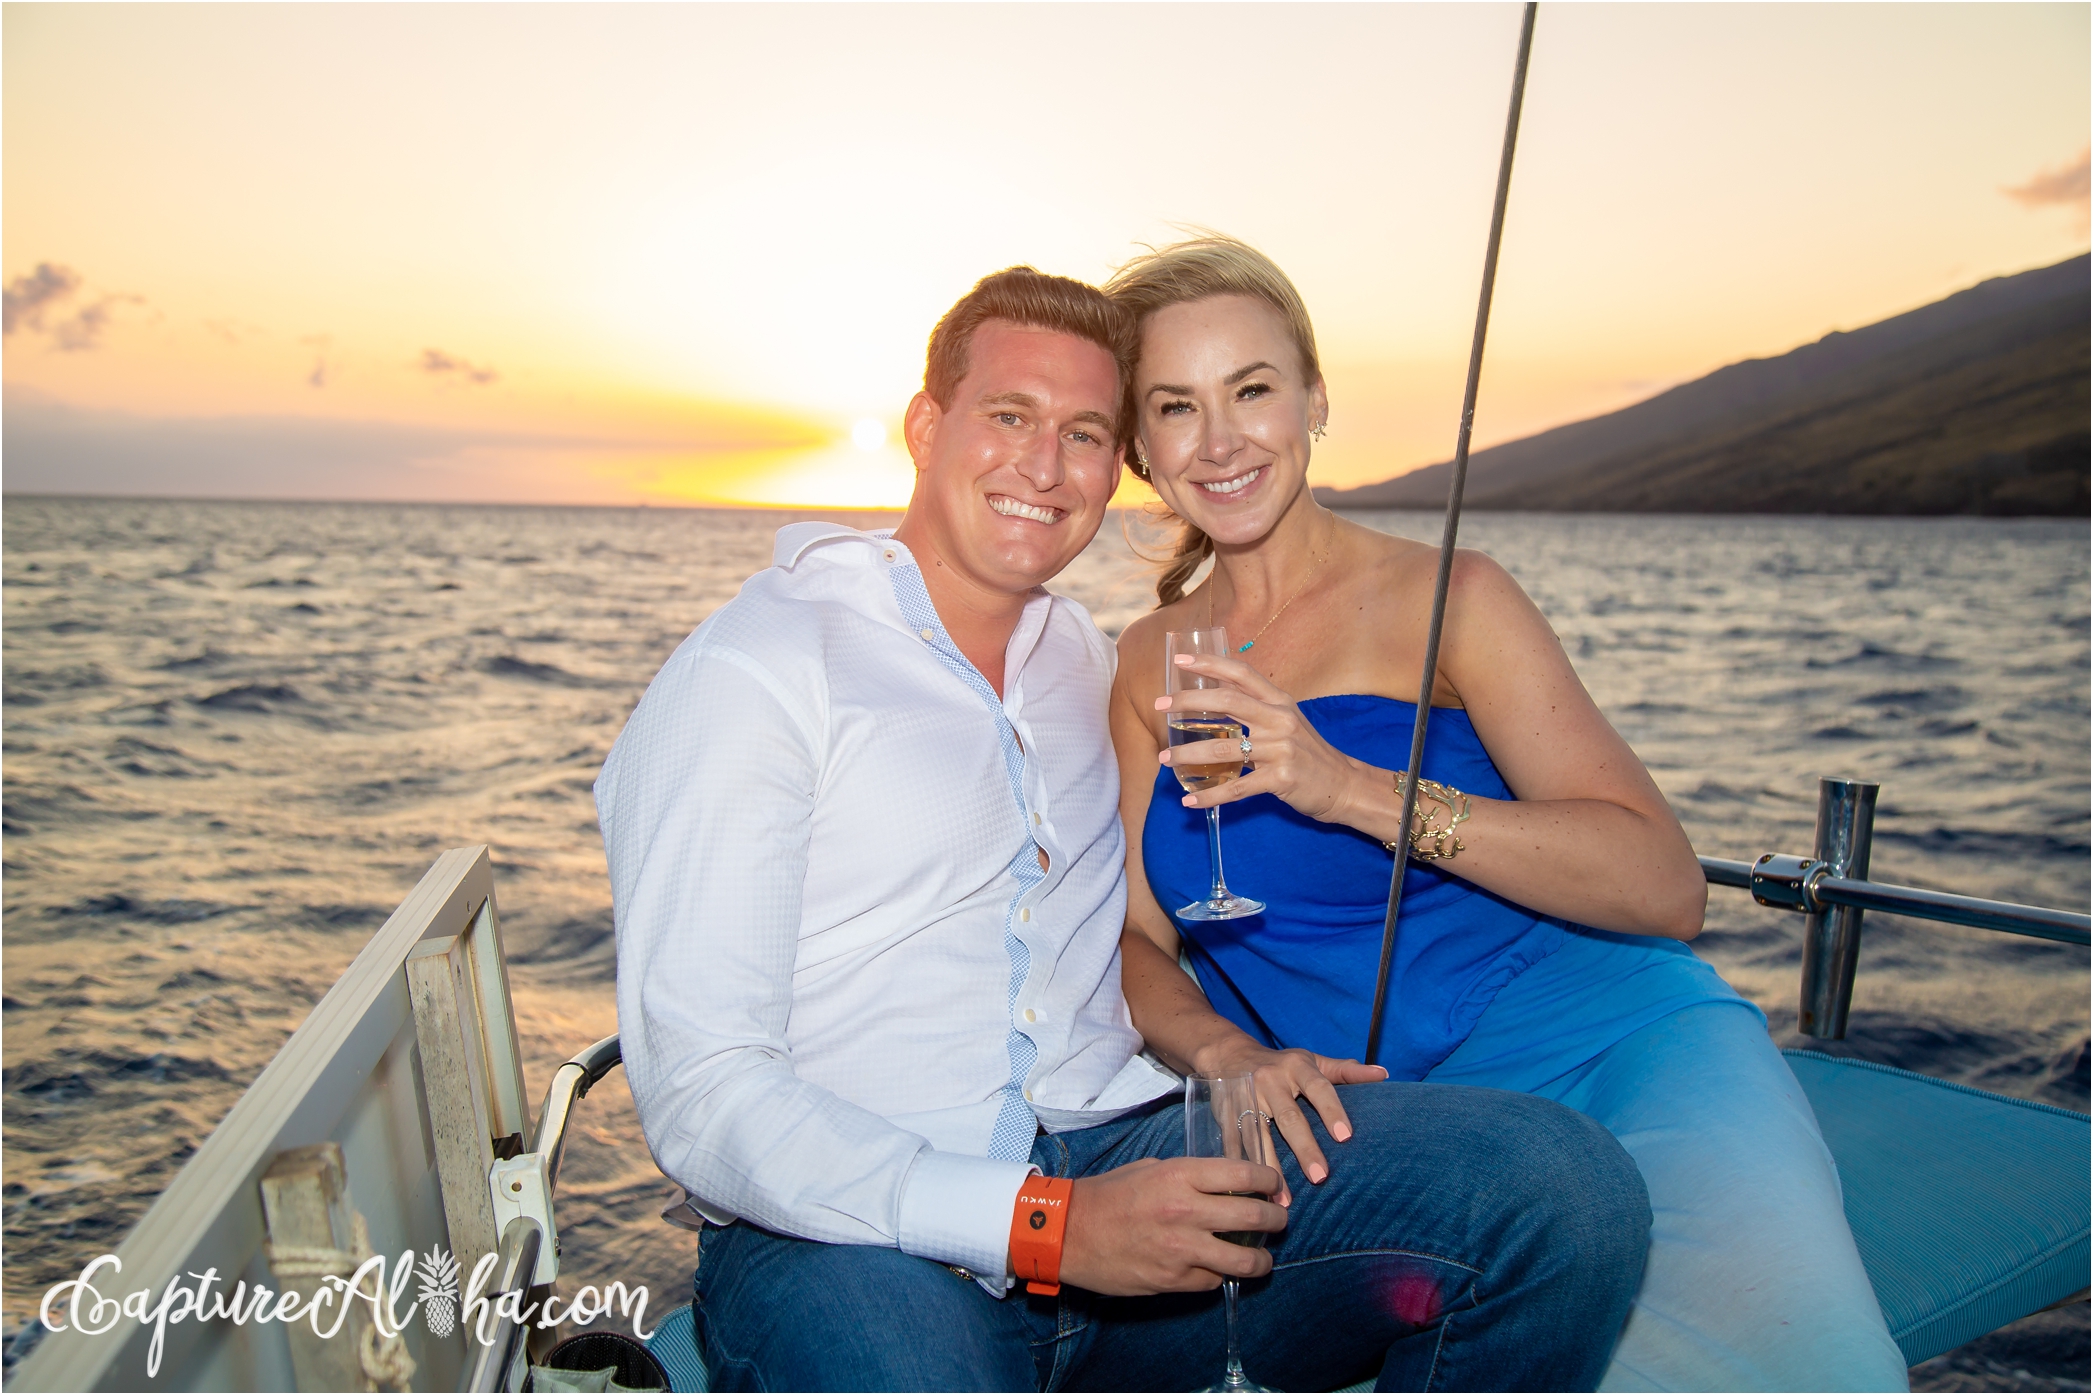 Surprise Proposal on maui fun charters sailboat at sunset